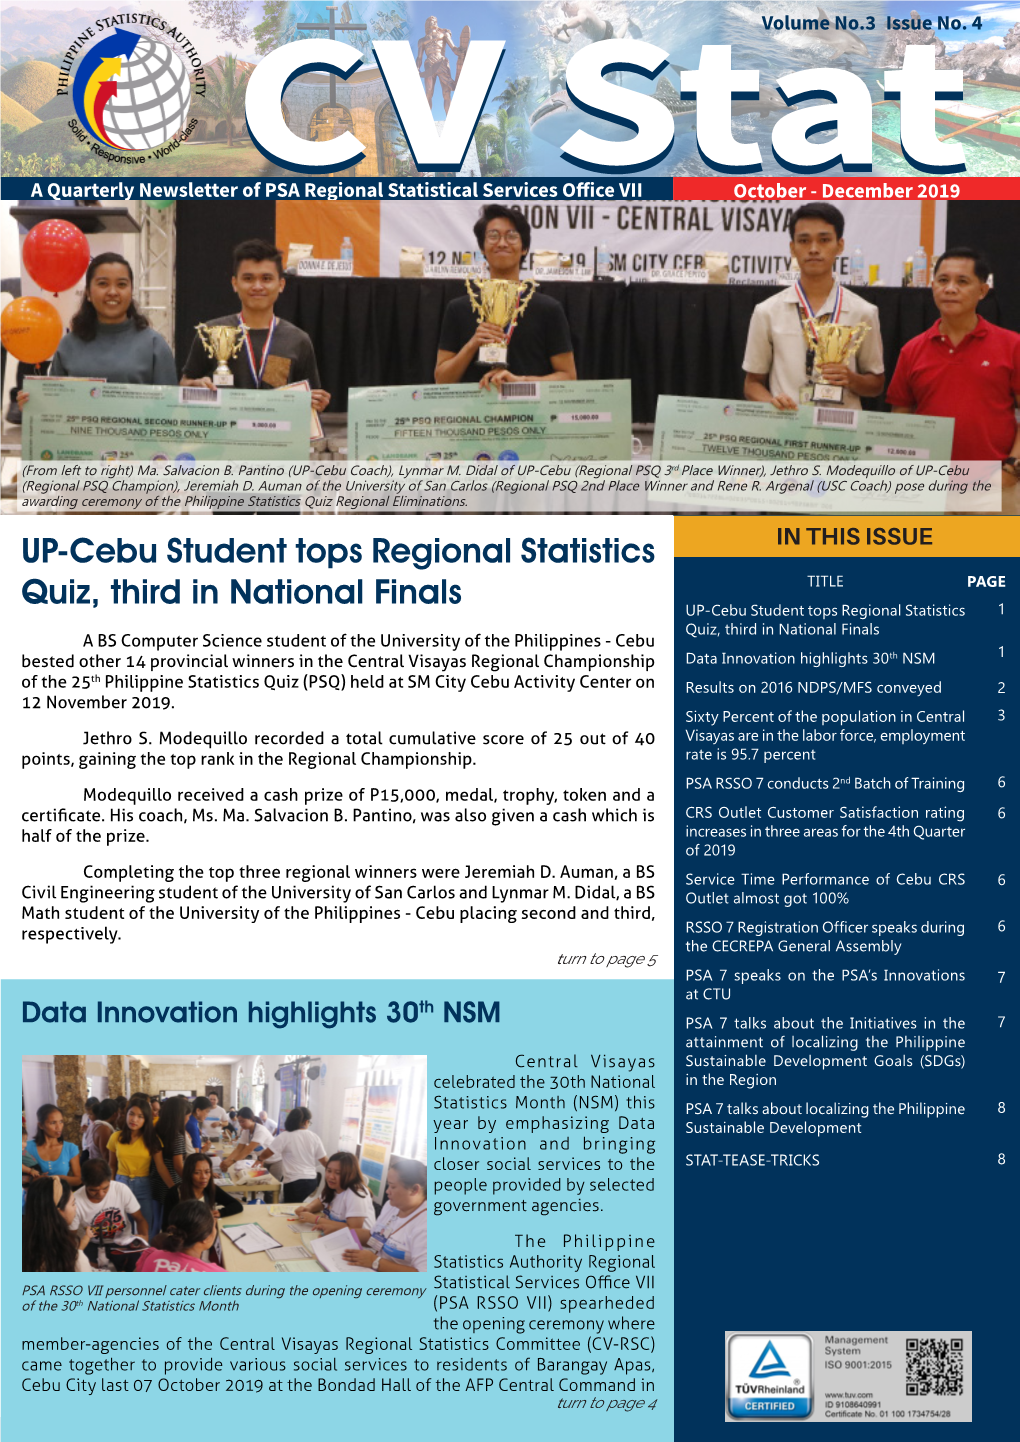 UP-Cebu Student Tops Regional Statistics Quiz, Third in National Finals